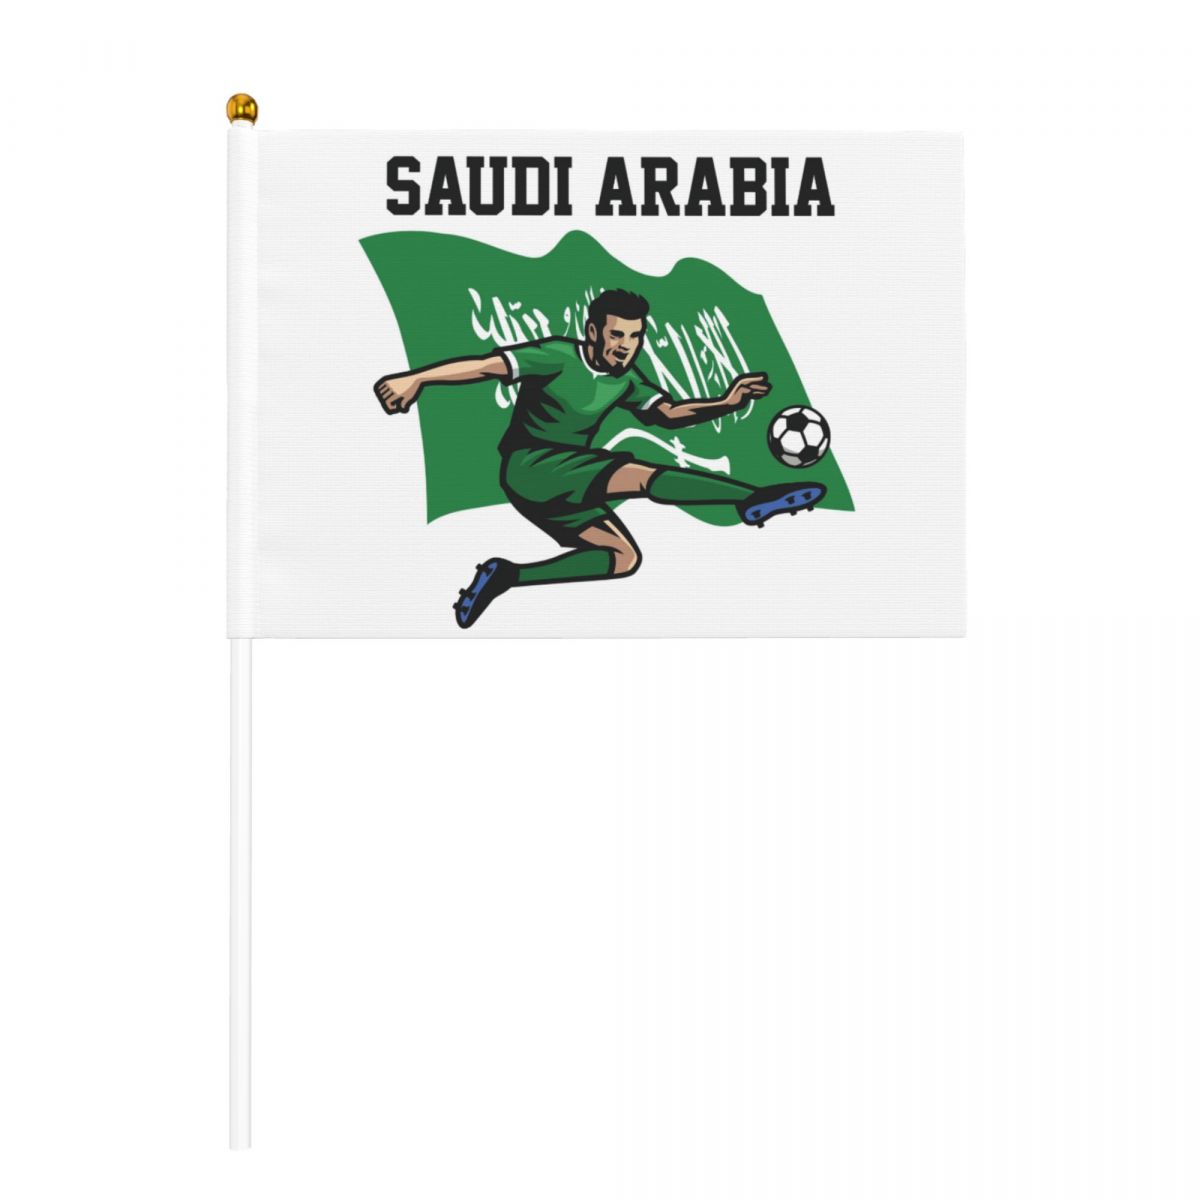 Saudi Arabia Soccer Player Hand Held Small Miniature Flags on Stick